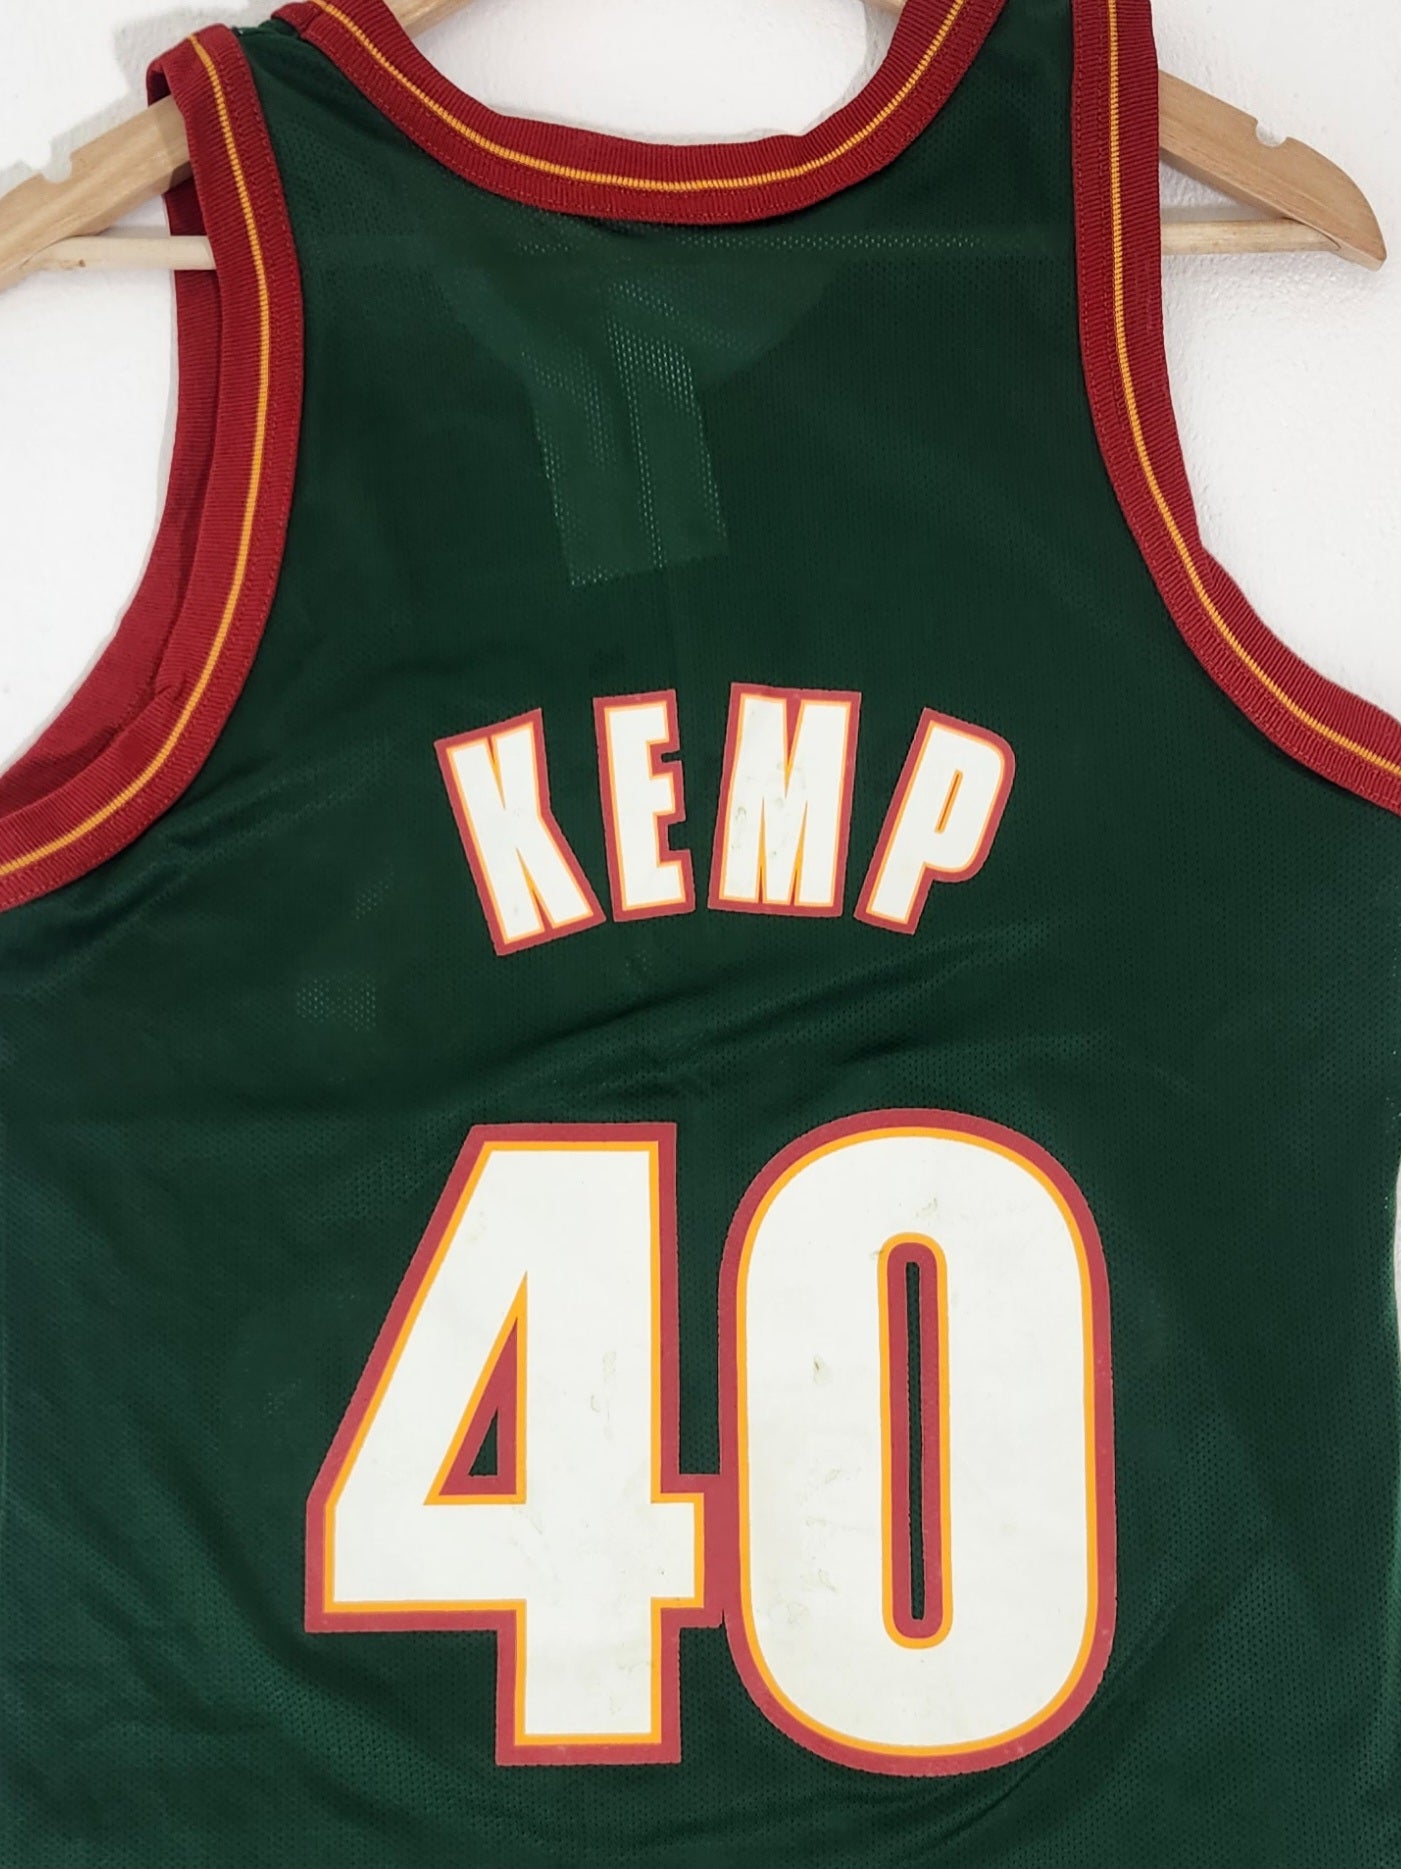 Vintage 1990s Champion NBA Seattle SuperSonics Shawn Kemp #40 Basketba